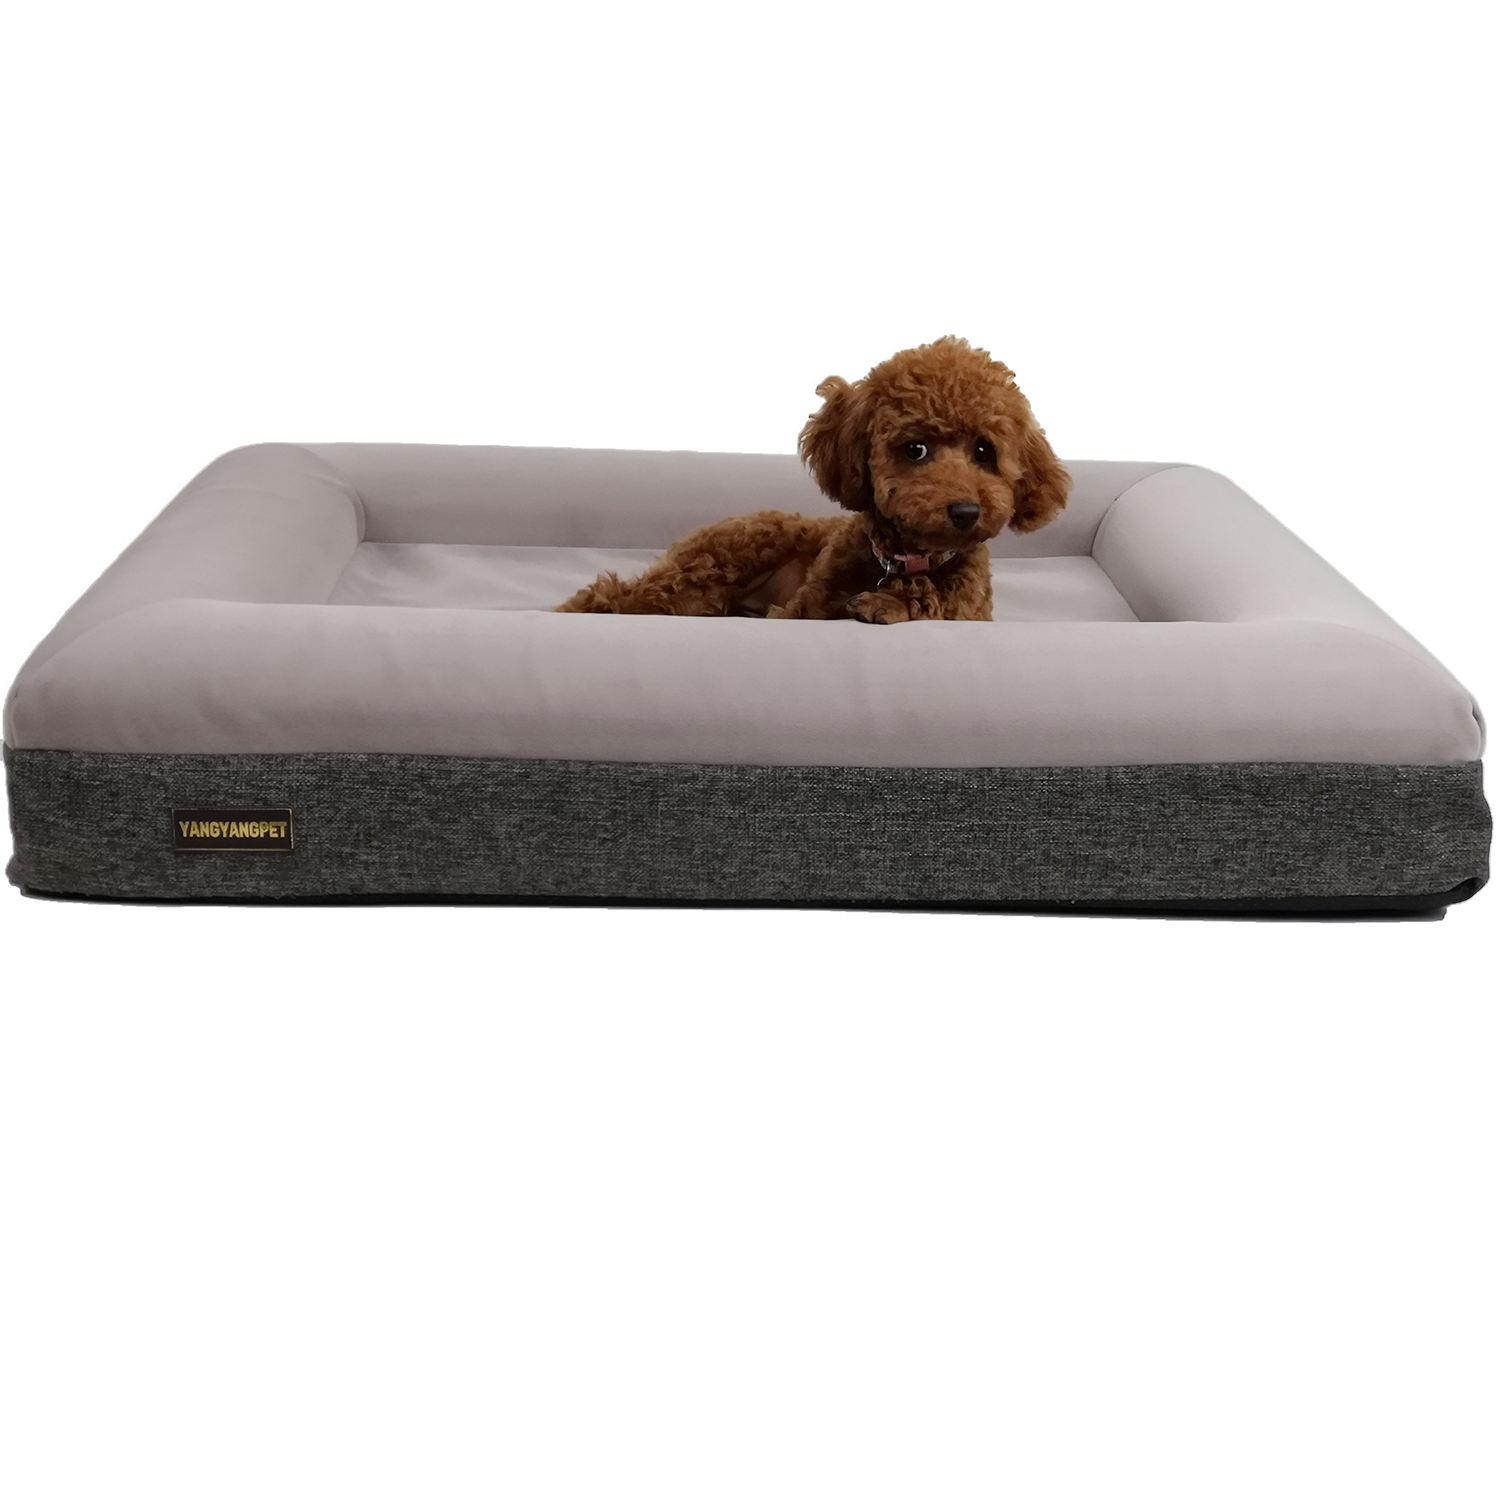 Bed For Dog Dog Beds Memory Foam Dog Bed Washable